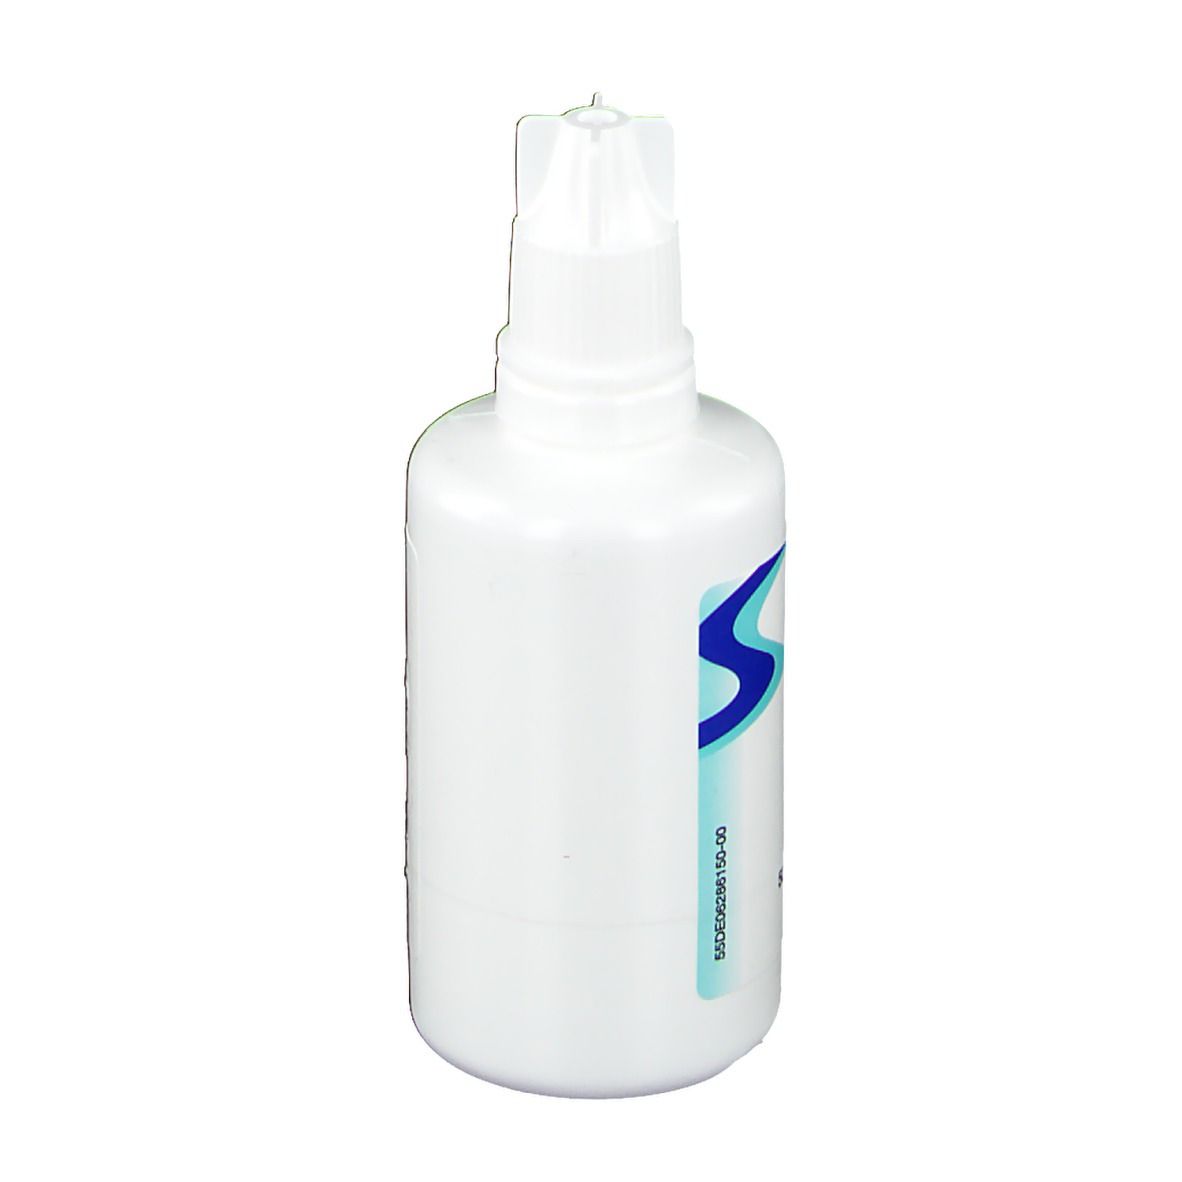 Systral® Hydrocort 0,25% Emulsion